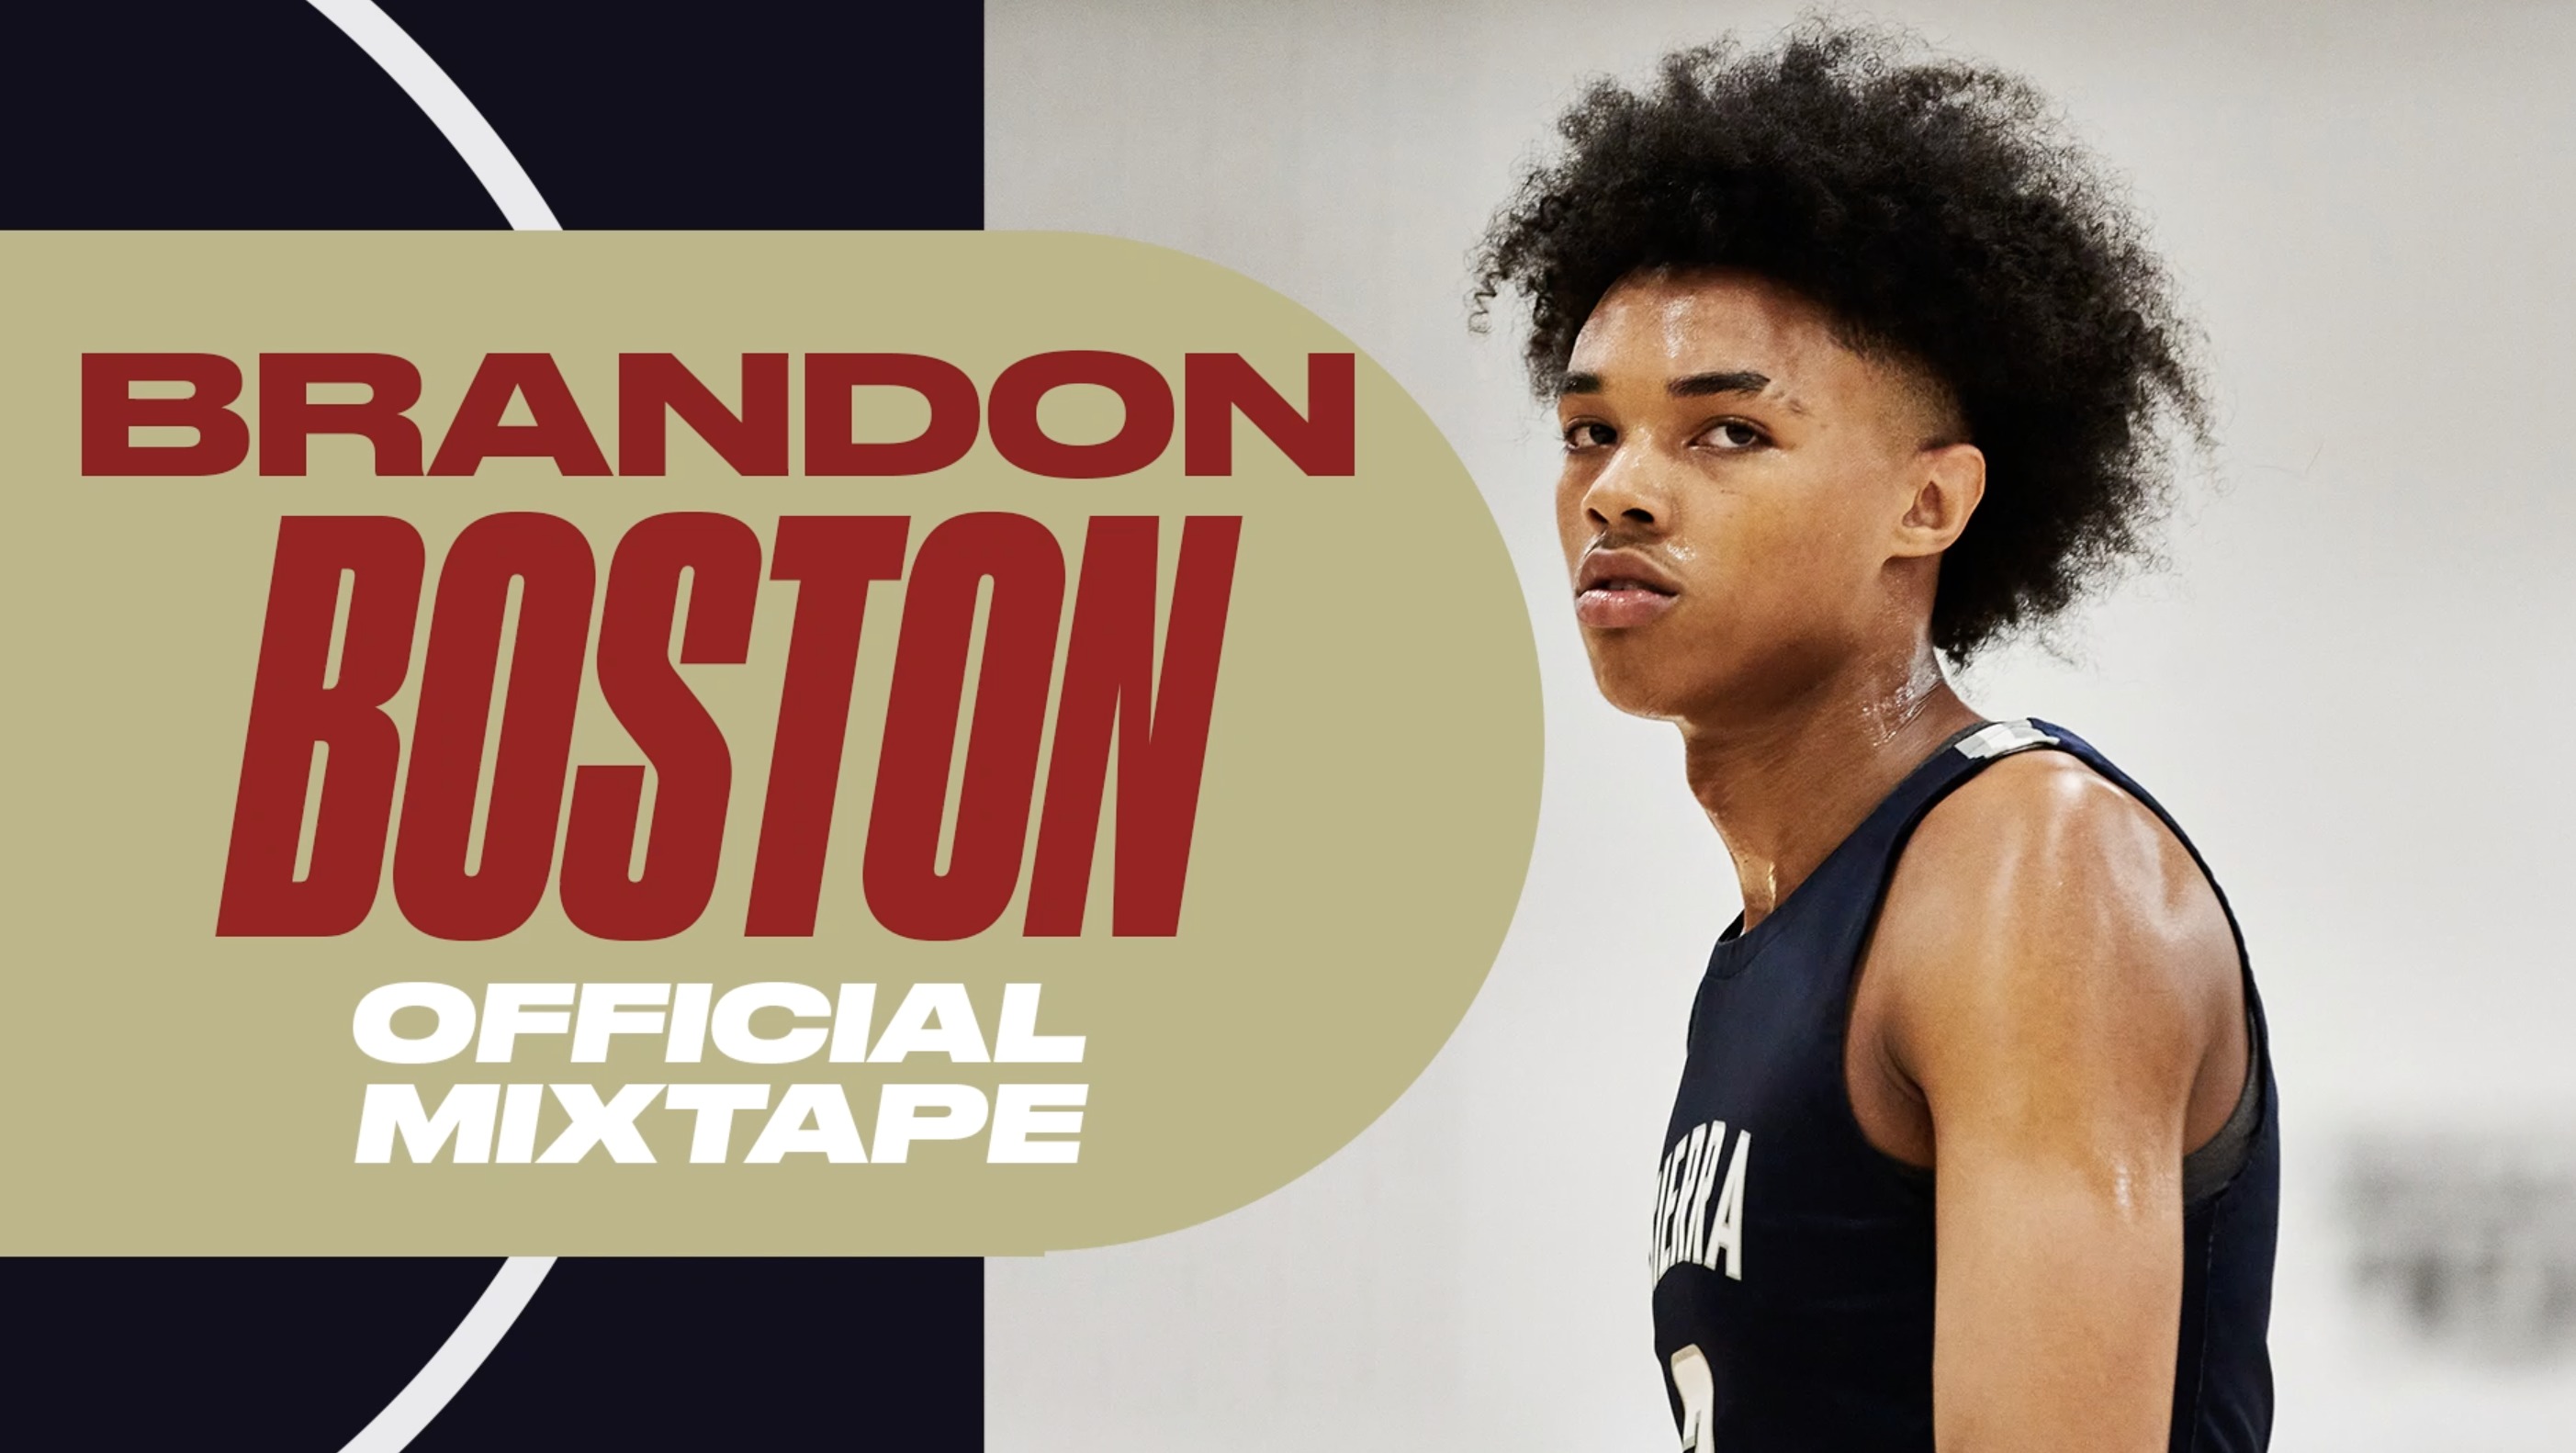 Brandon Boston, top 2020 prospect with Duke & Florida offers, is